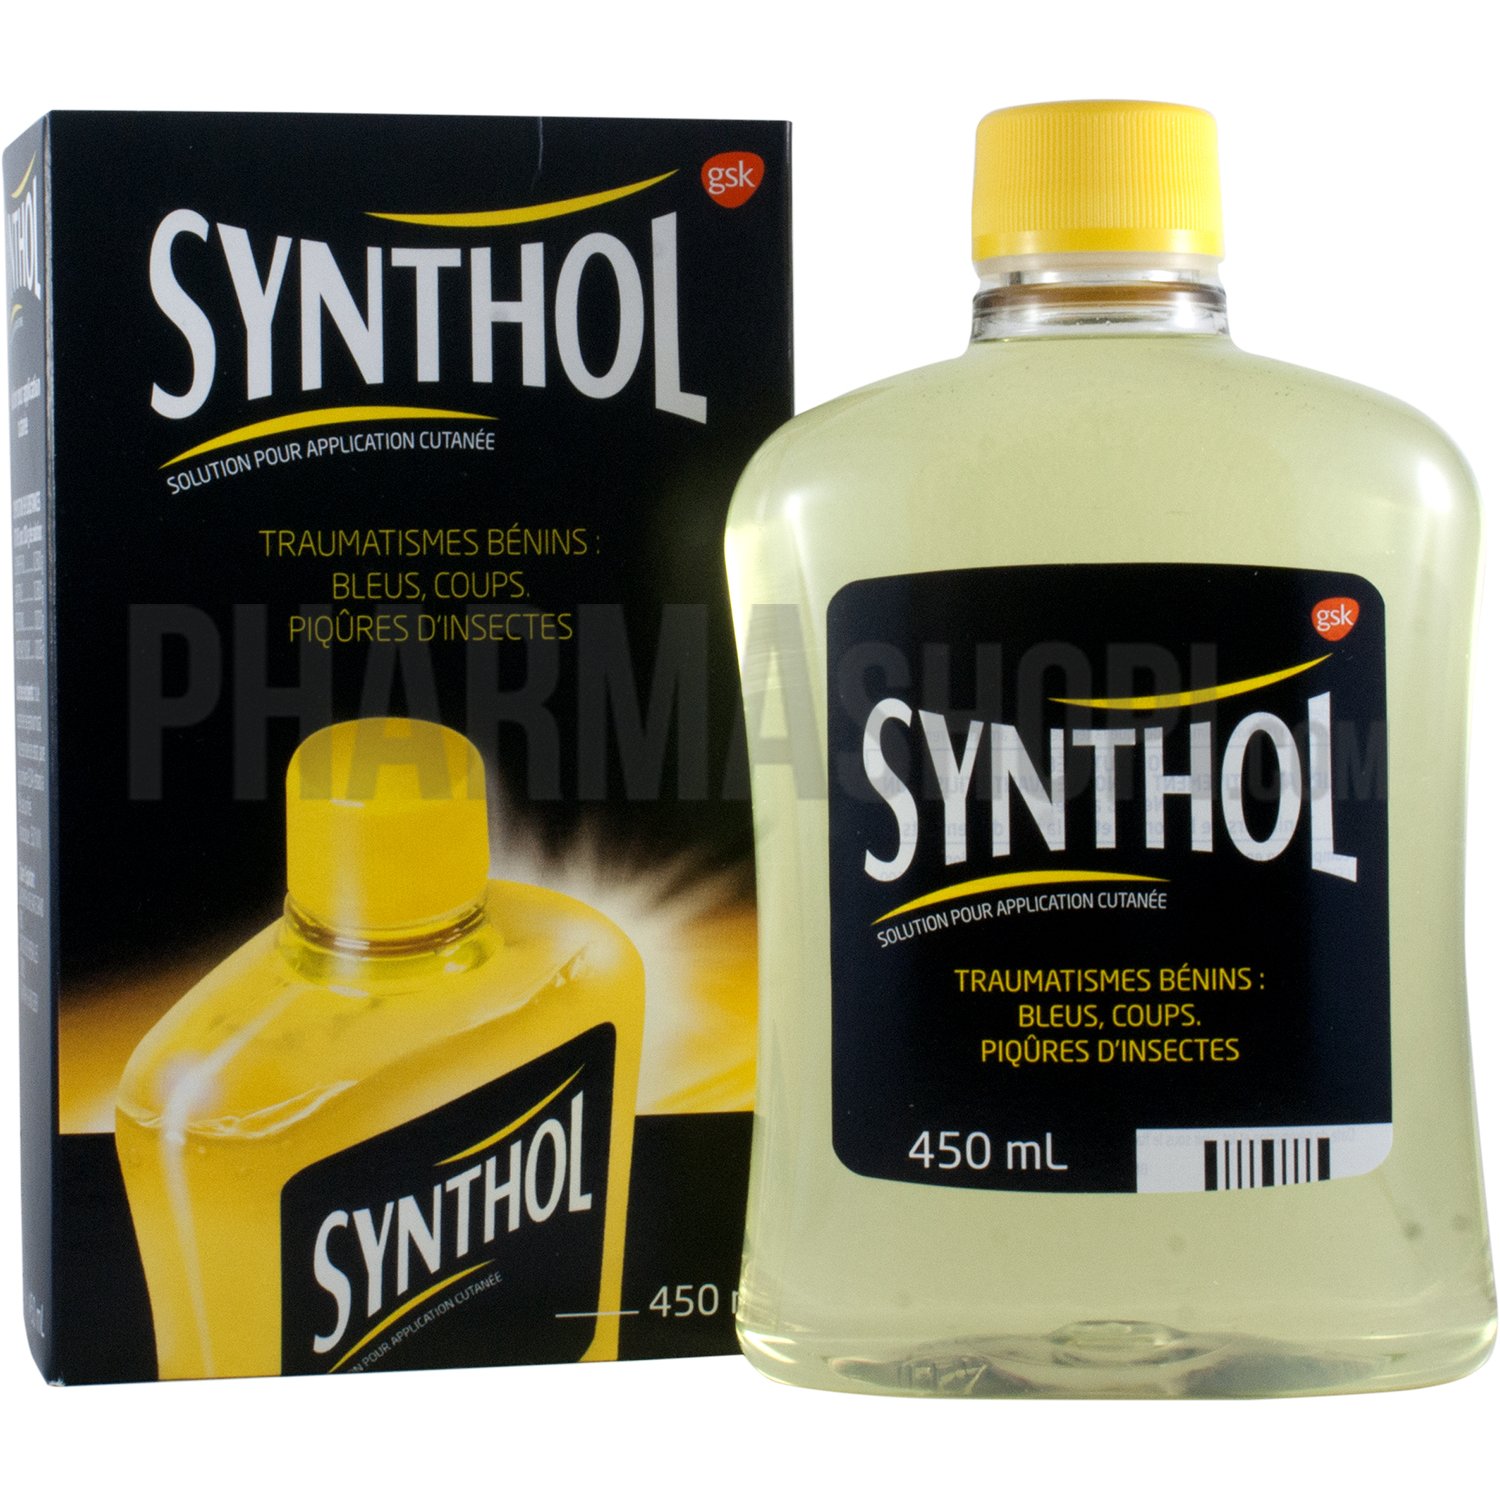 Synthol solution application cutanée 450 ml